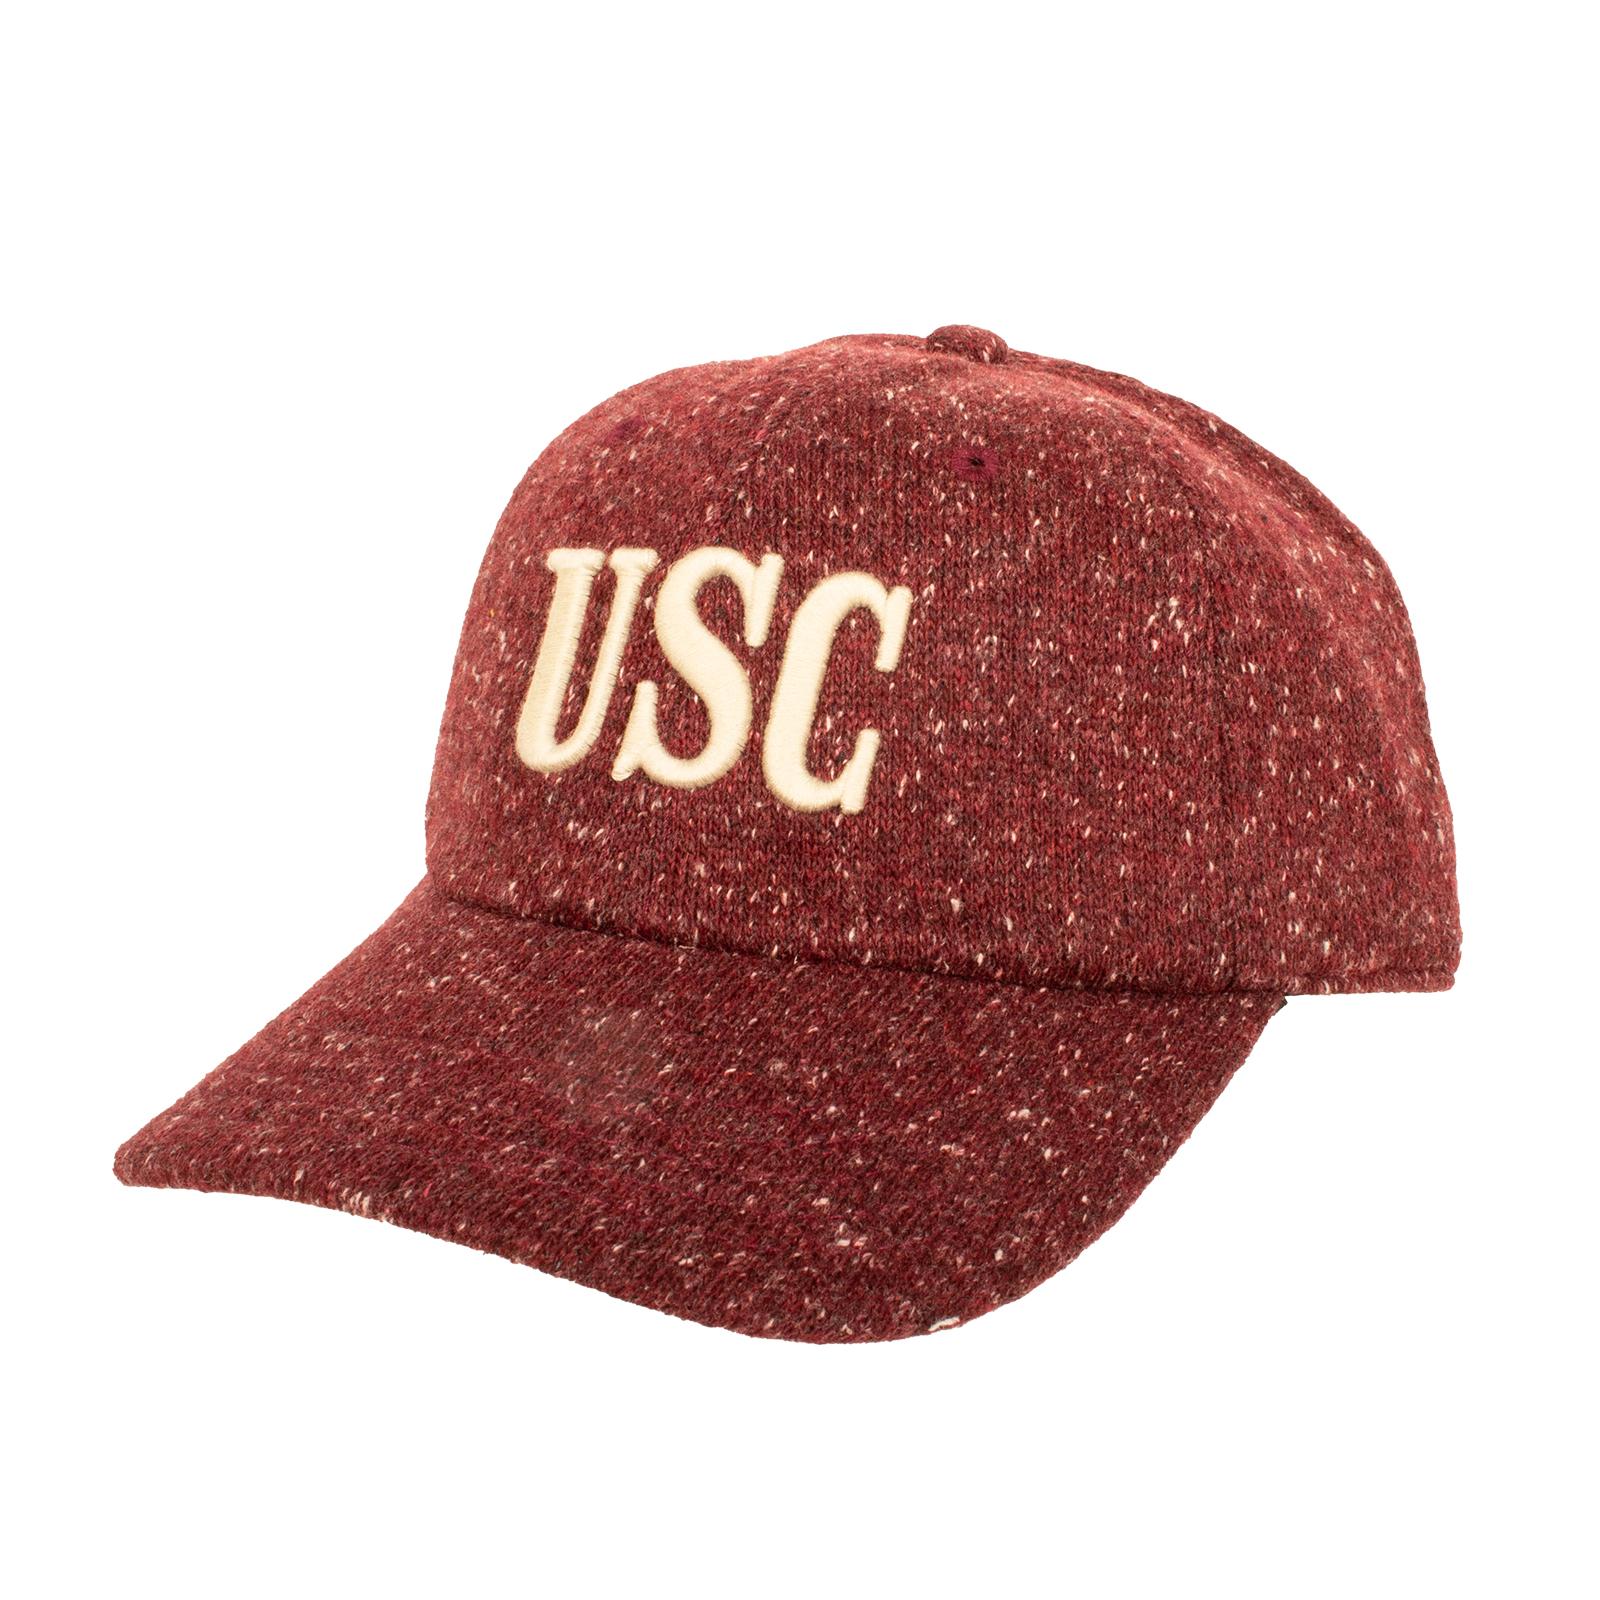 USC Unisex Wool Canopy Adjustable Hat Burgundy image01